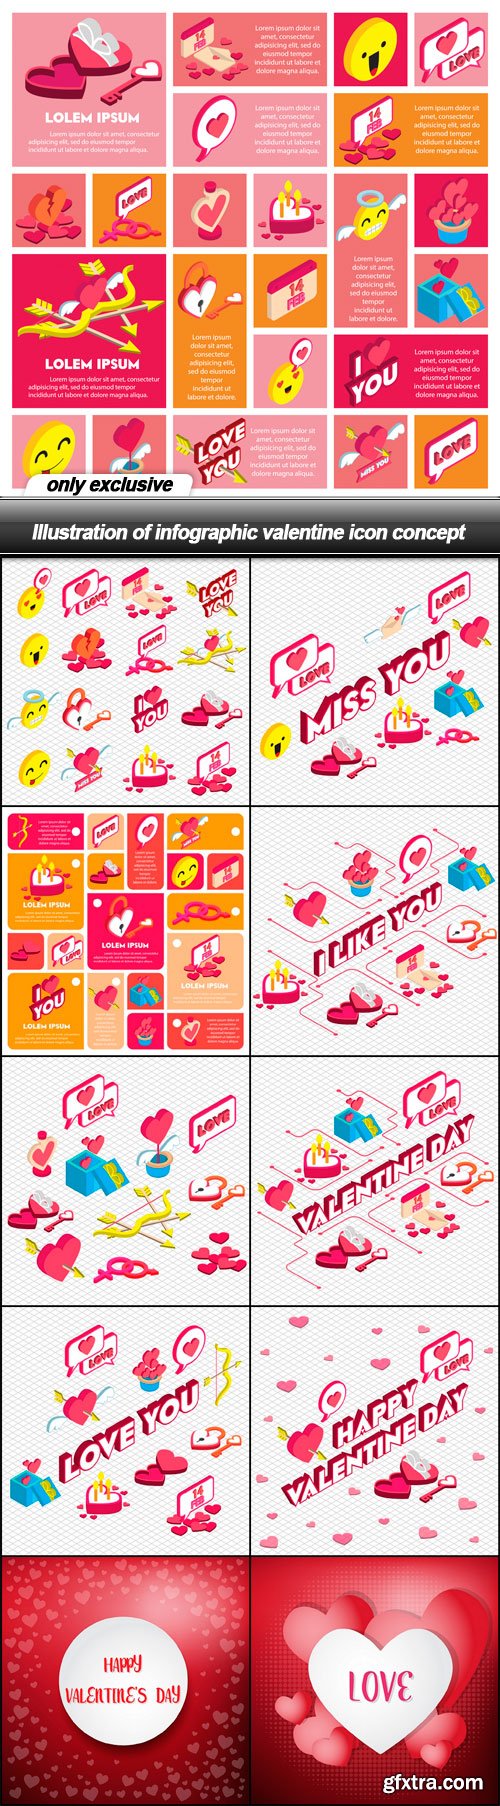 Illustration of infographic valentine icon concept - 11 EPS